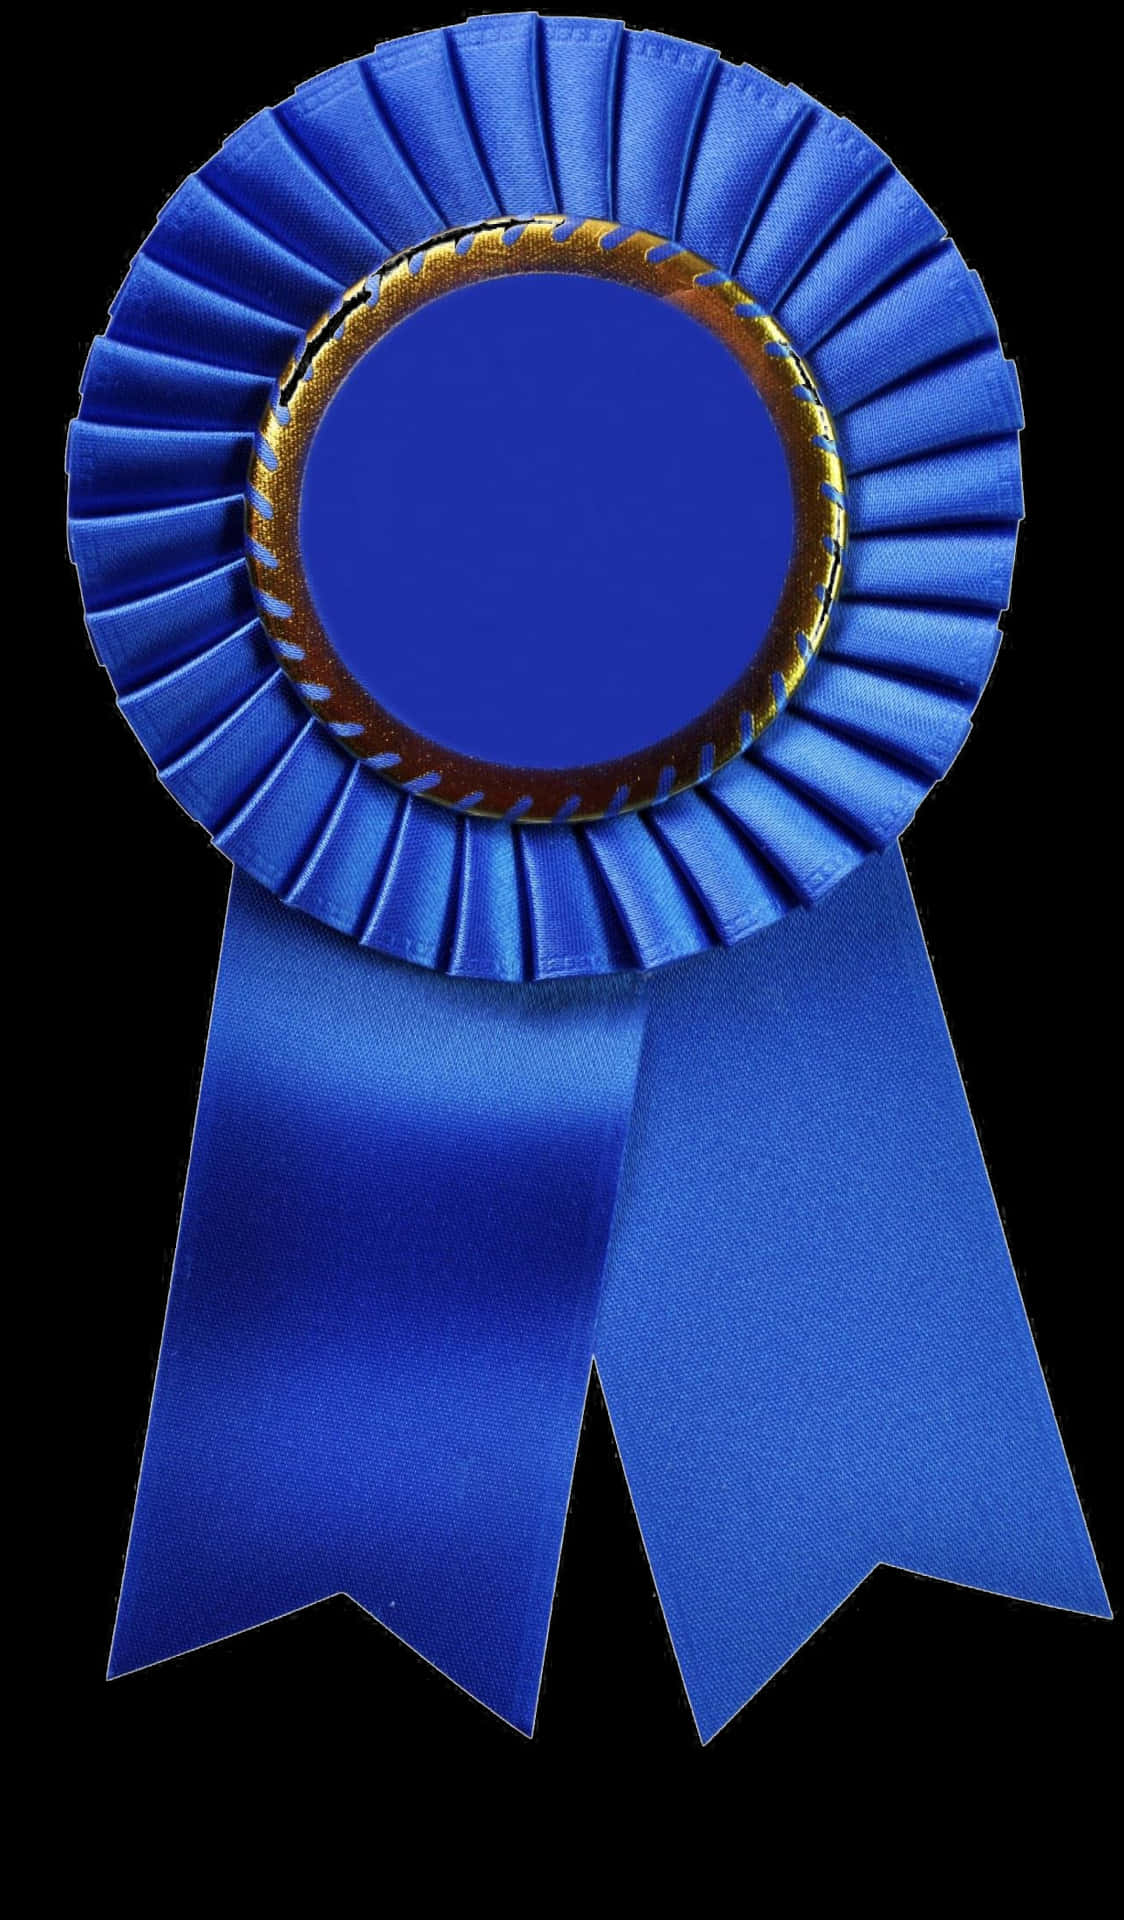 Blue Award Ribbon Isolated PNG image